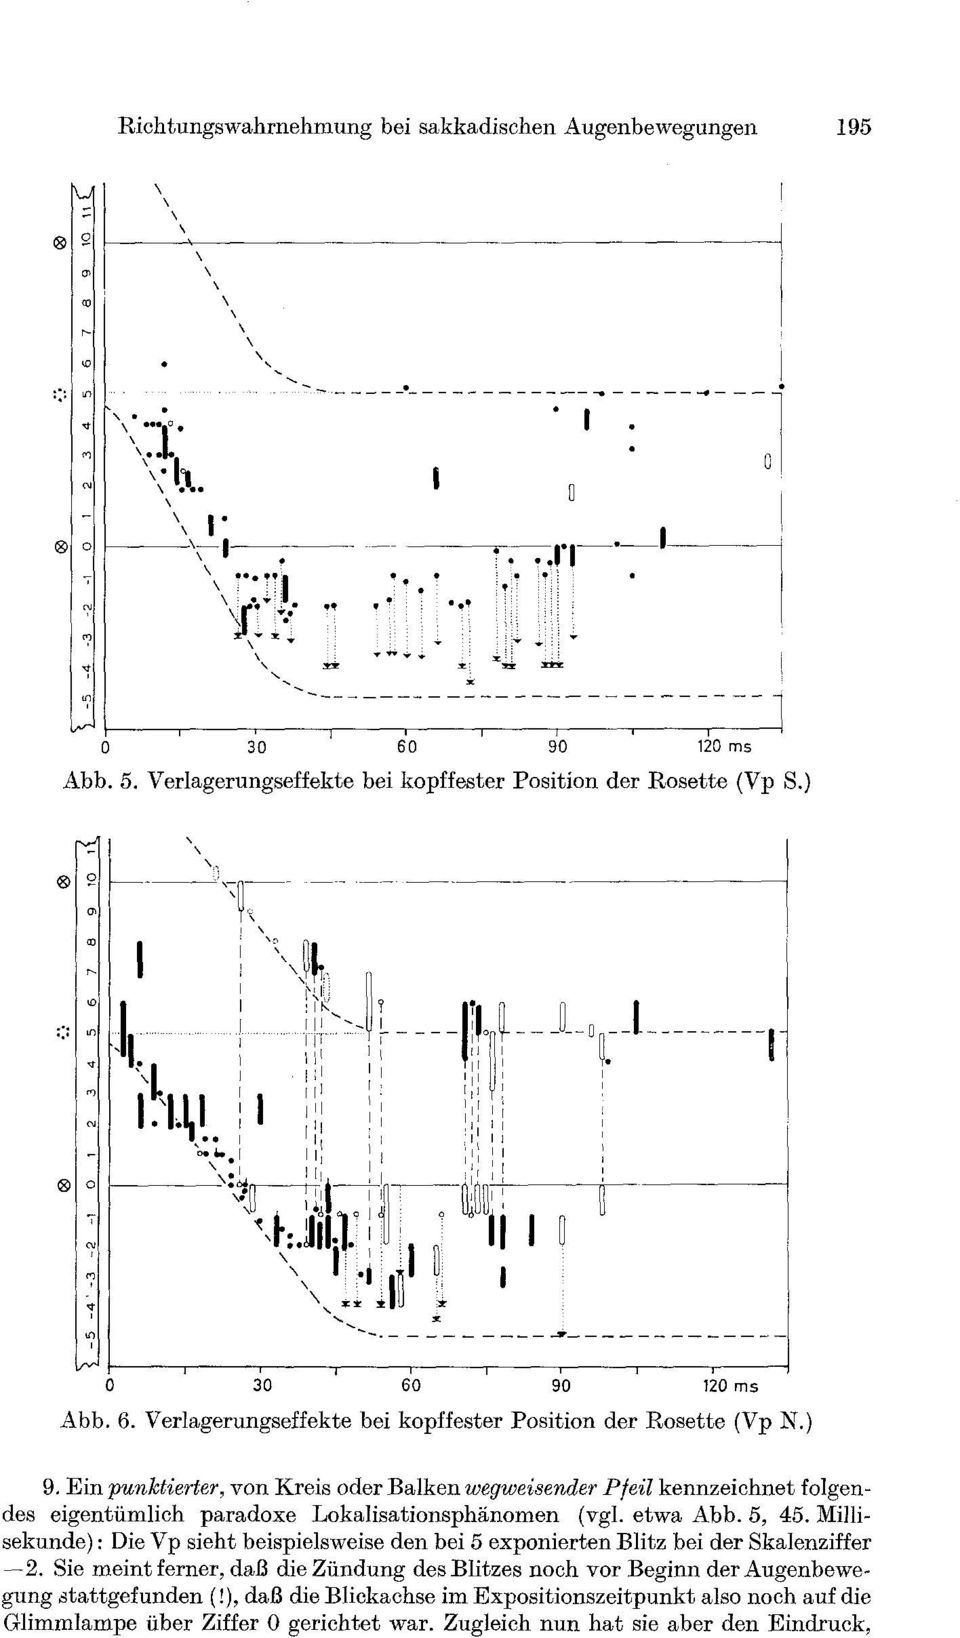 0 ' 9'0 ' 189 ms Abb. 6. Verlagerungseffekte bei kopffester Position der Rosette (Vp N.) 9.